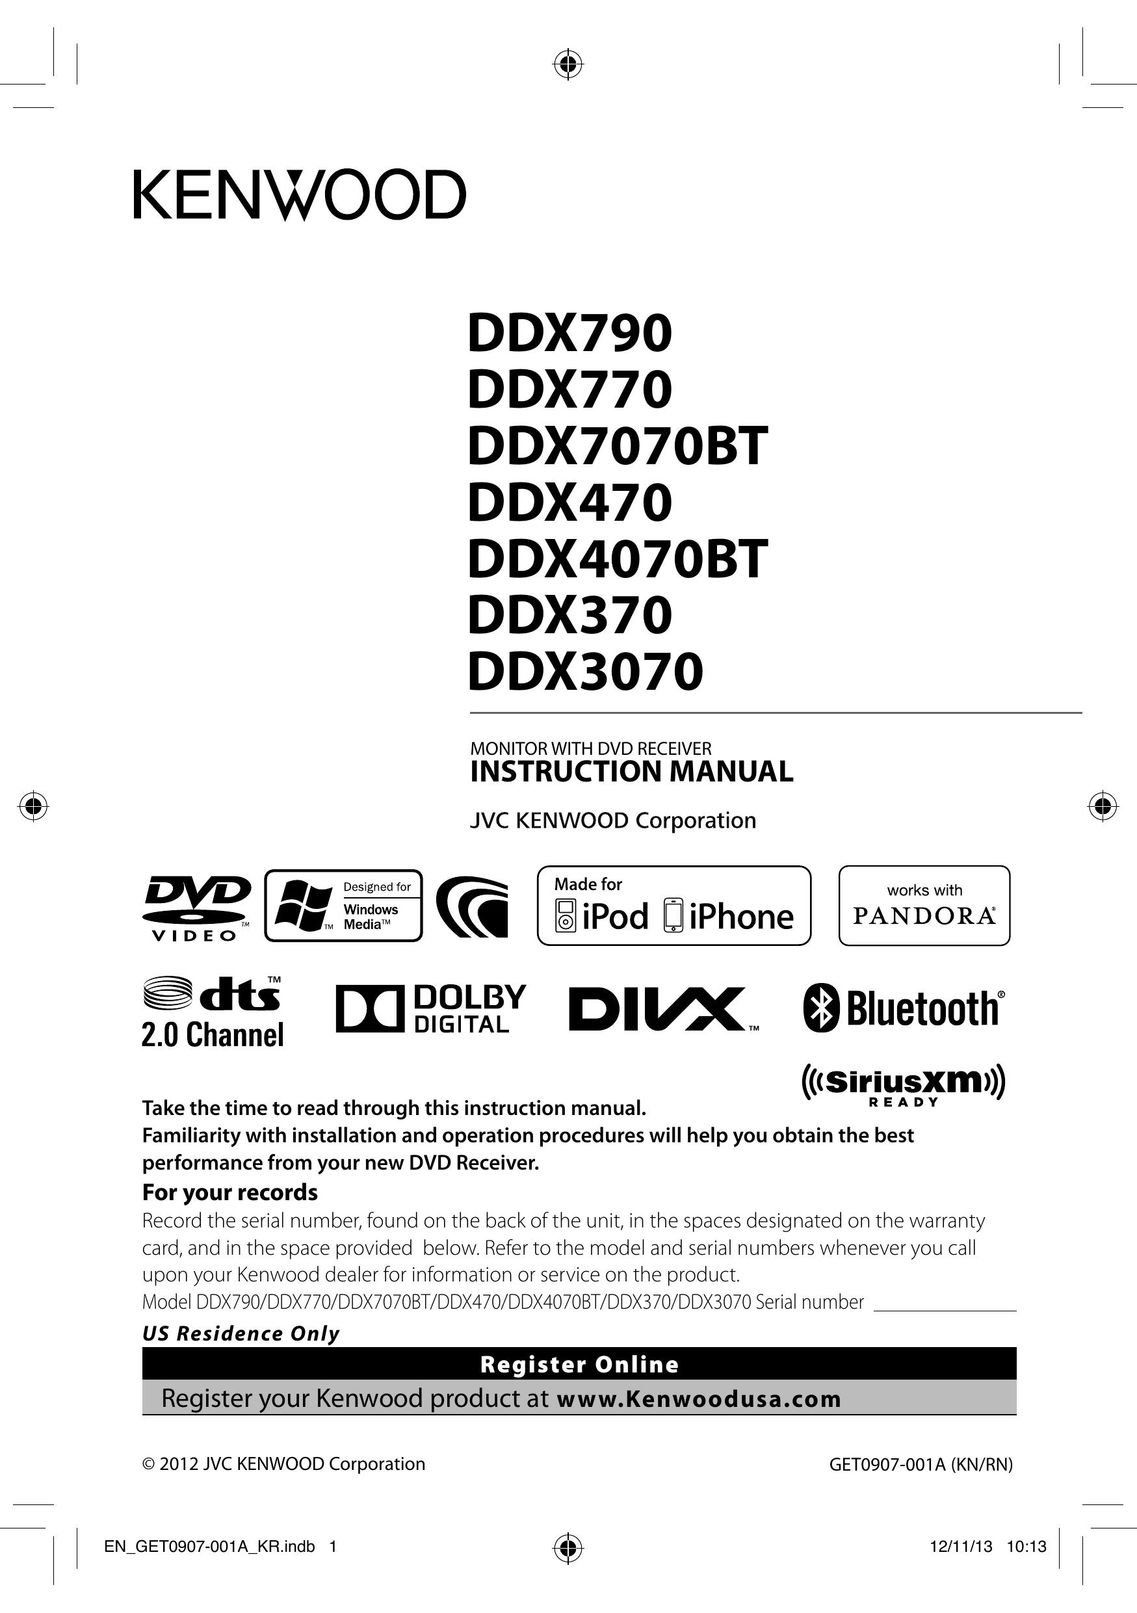 Kenwood DDX770 Computer Monitor User Manual